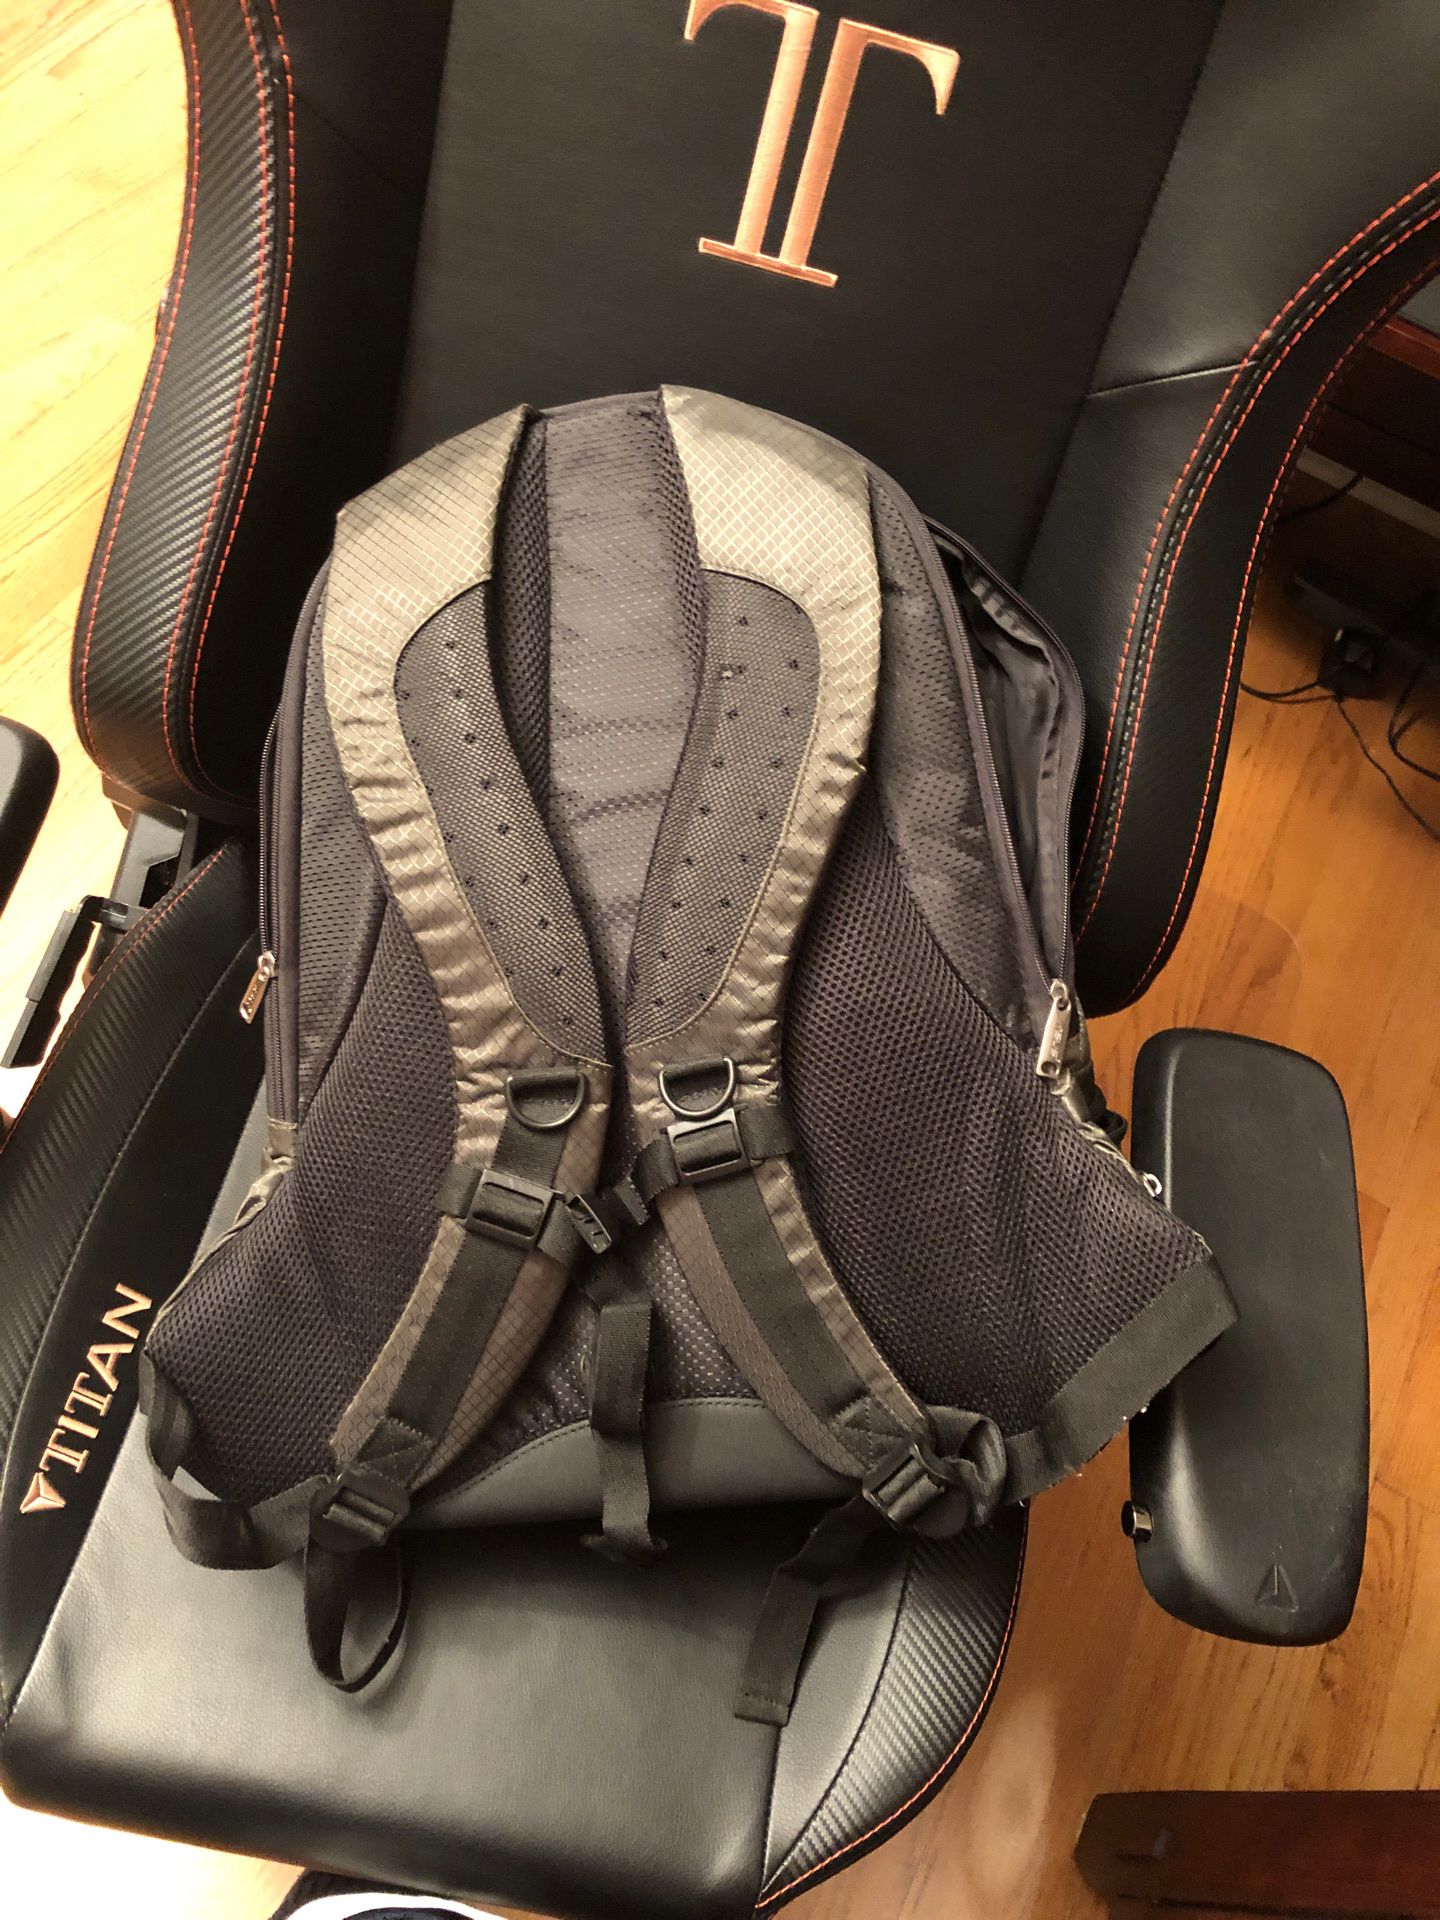 Asus ROG republic of gaming laptop backpack